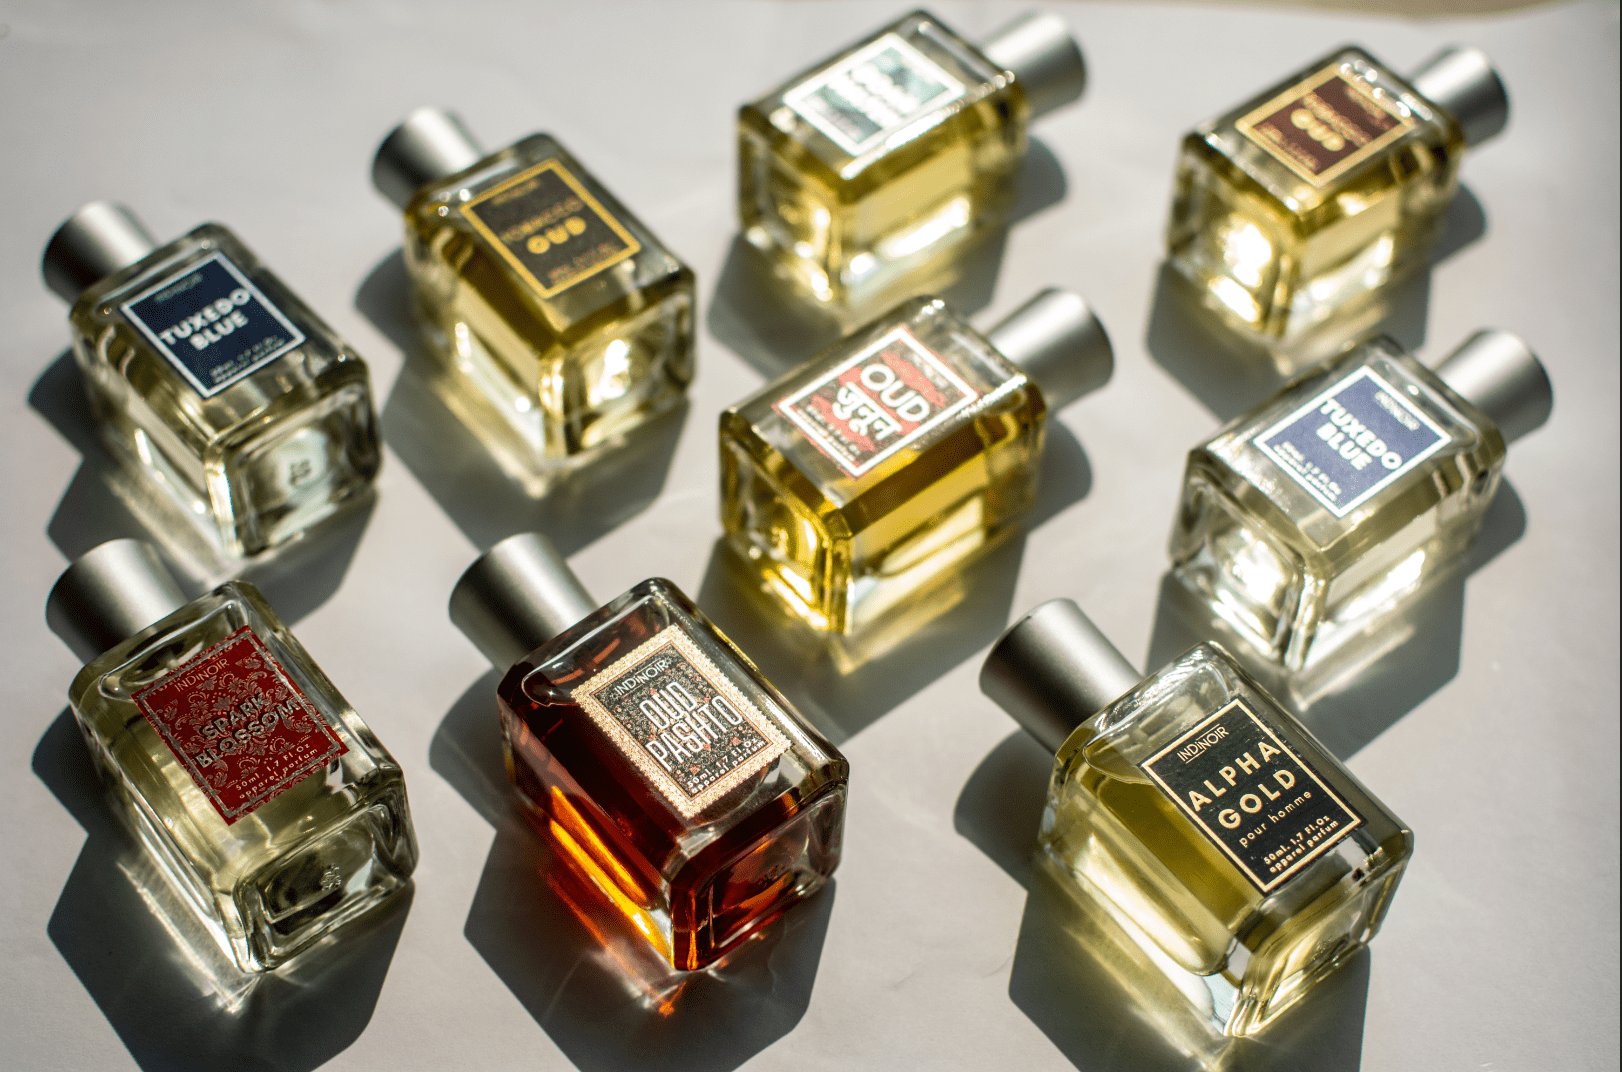 All Perfumes